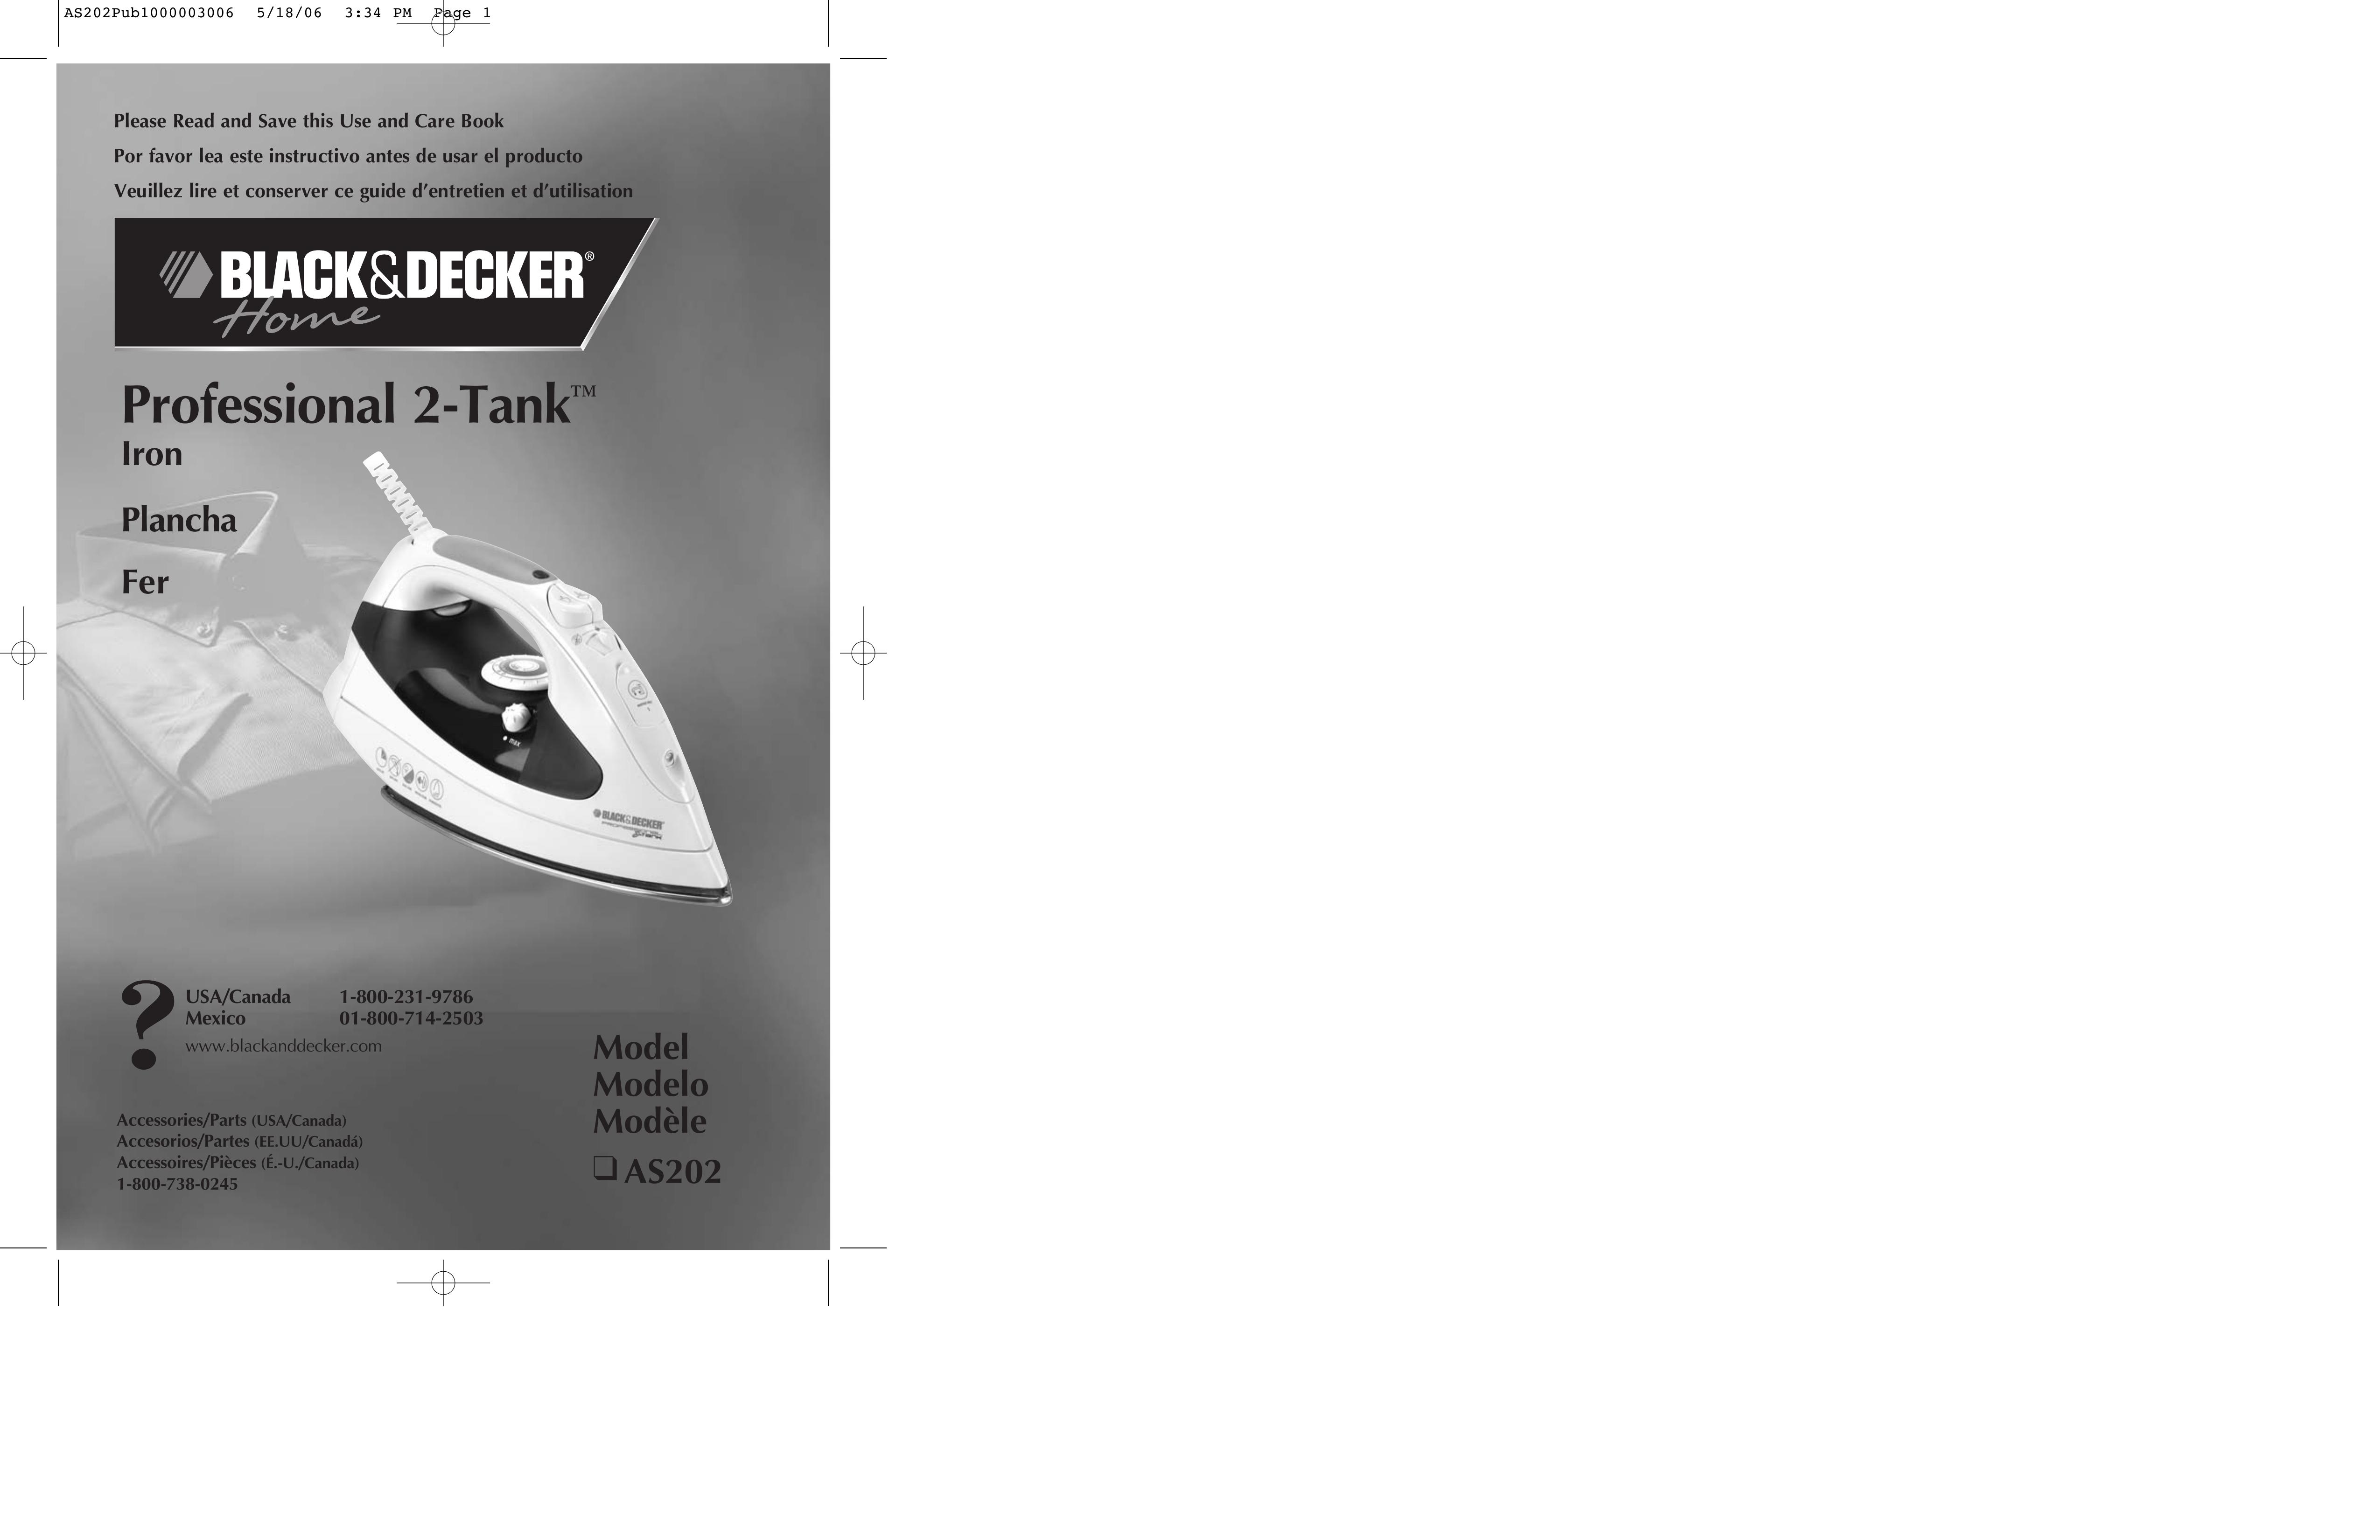 Black & Decker AS202 Iron User Manual (Page 1)